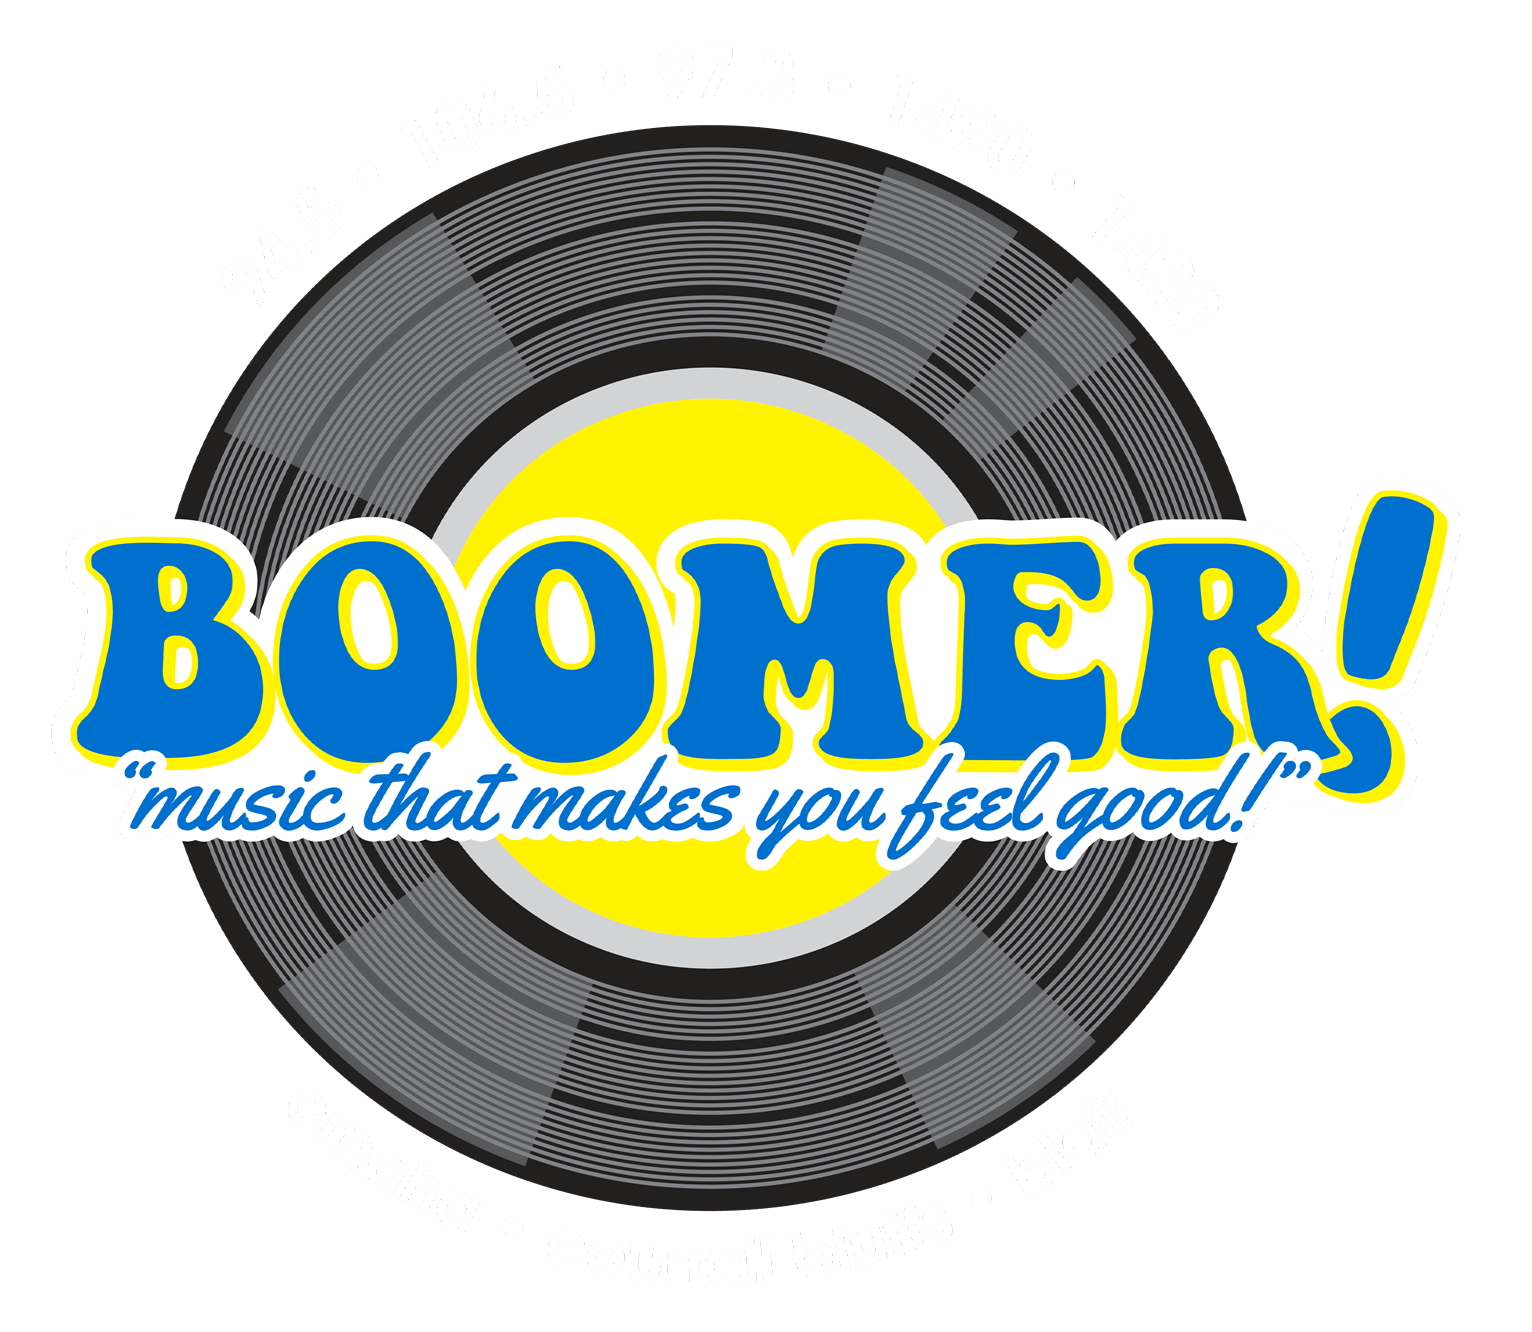 Boomer Sports Network